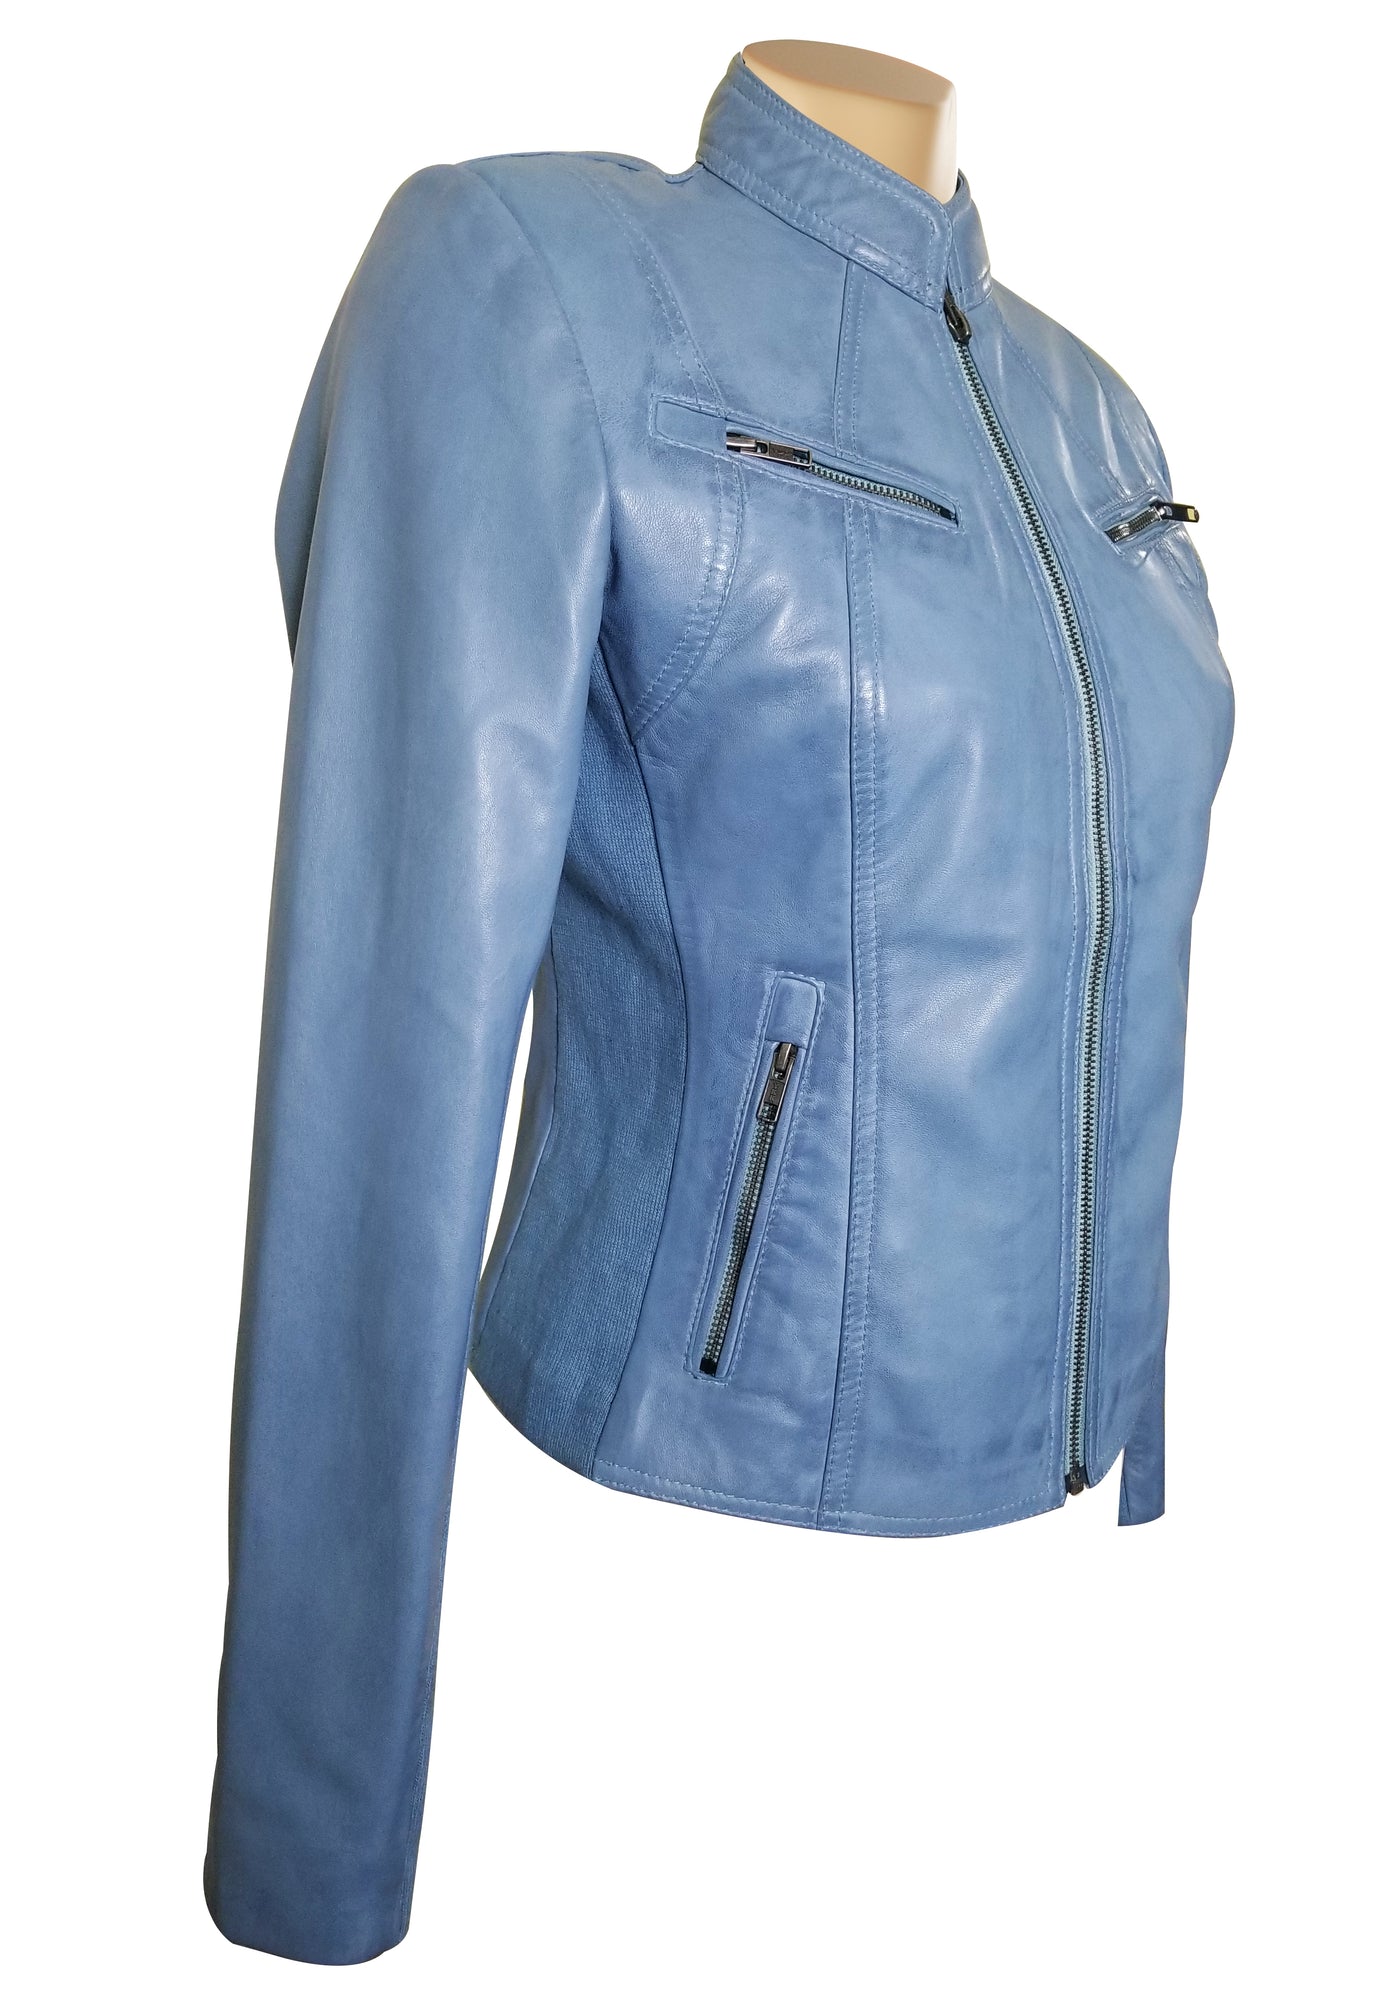 Women Soft Erna Sky blue leather stretch jacket